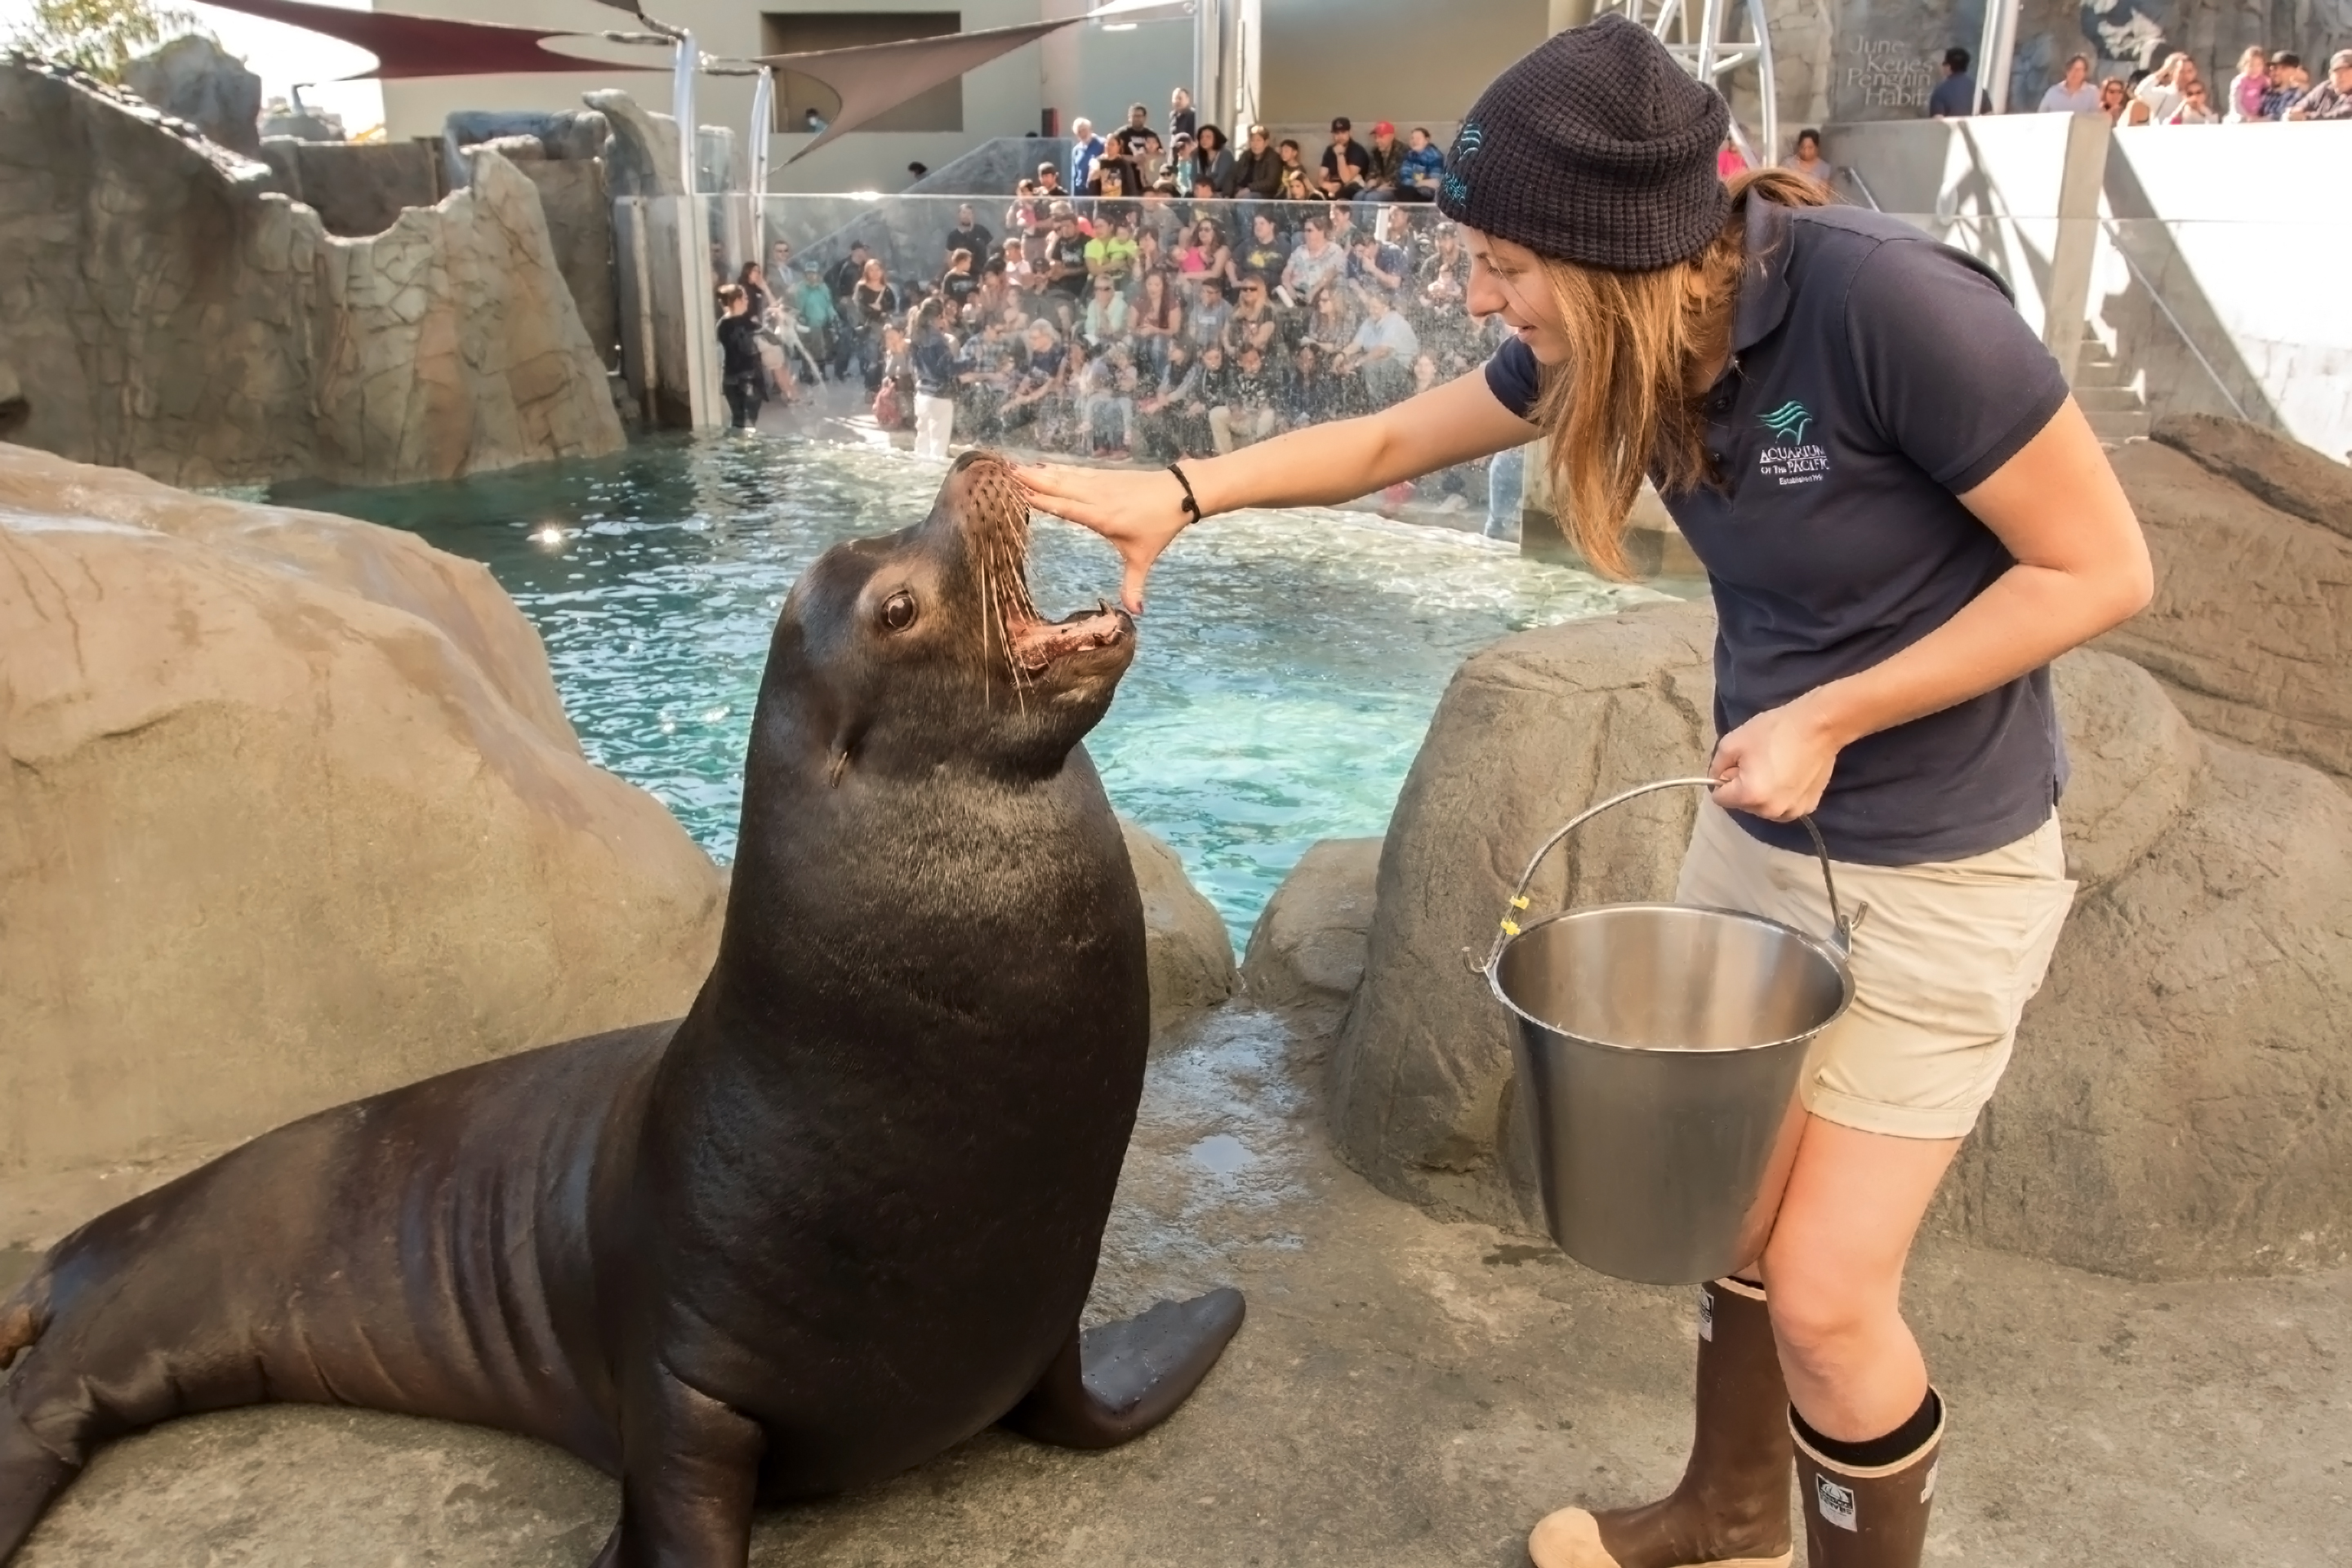 Aquarium staff inspecting sea lion mouth